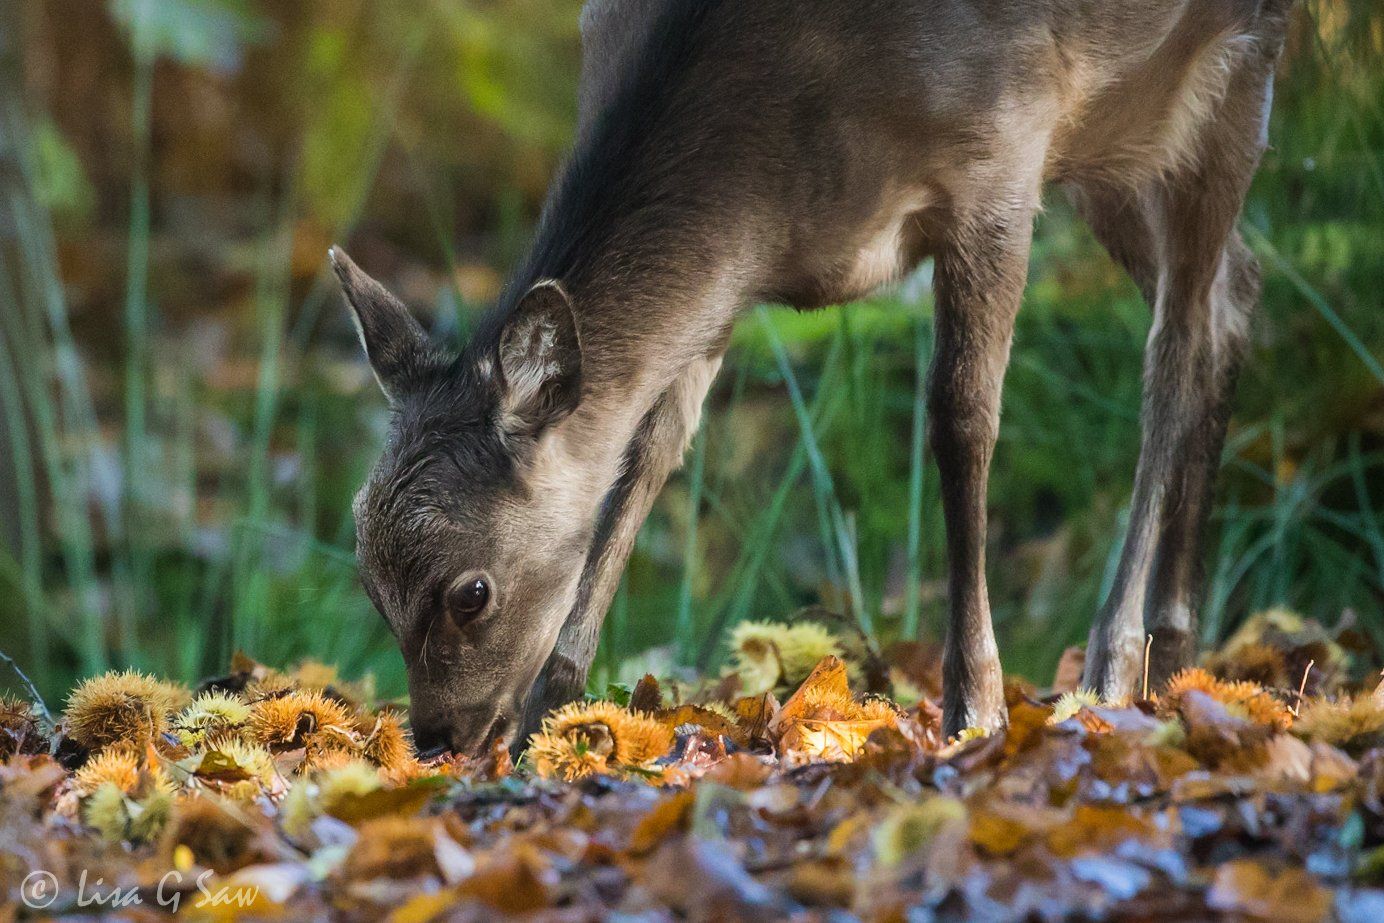 Female Sika Deer picking through leaf litter